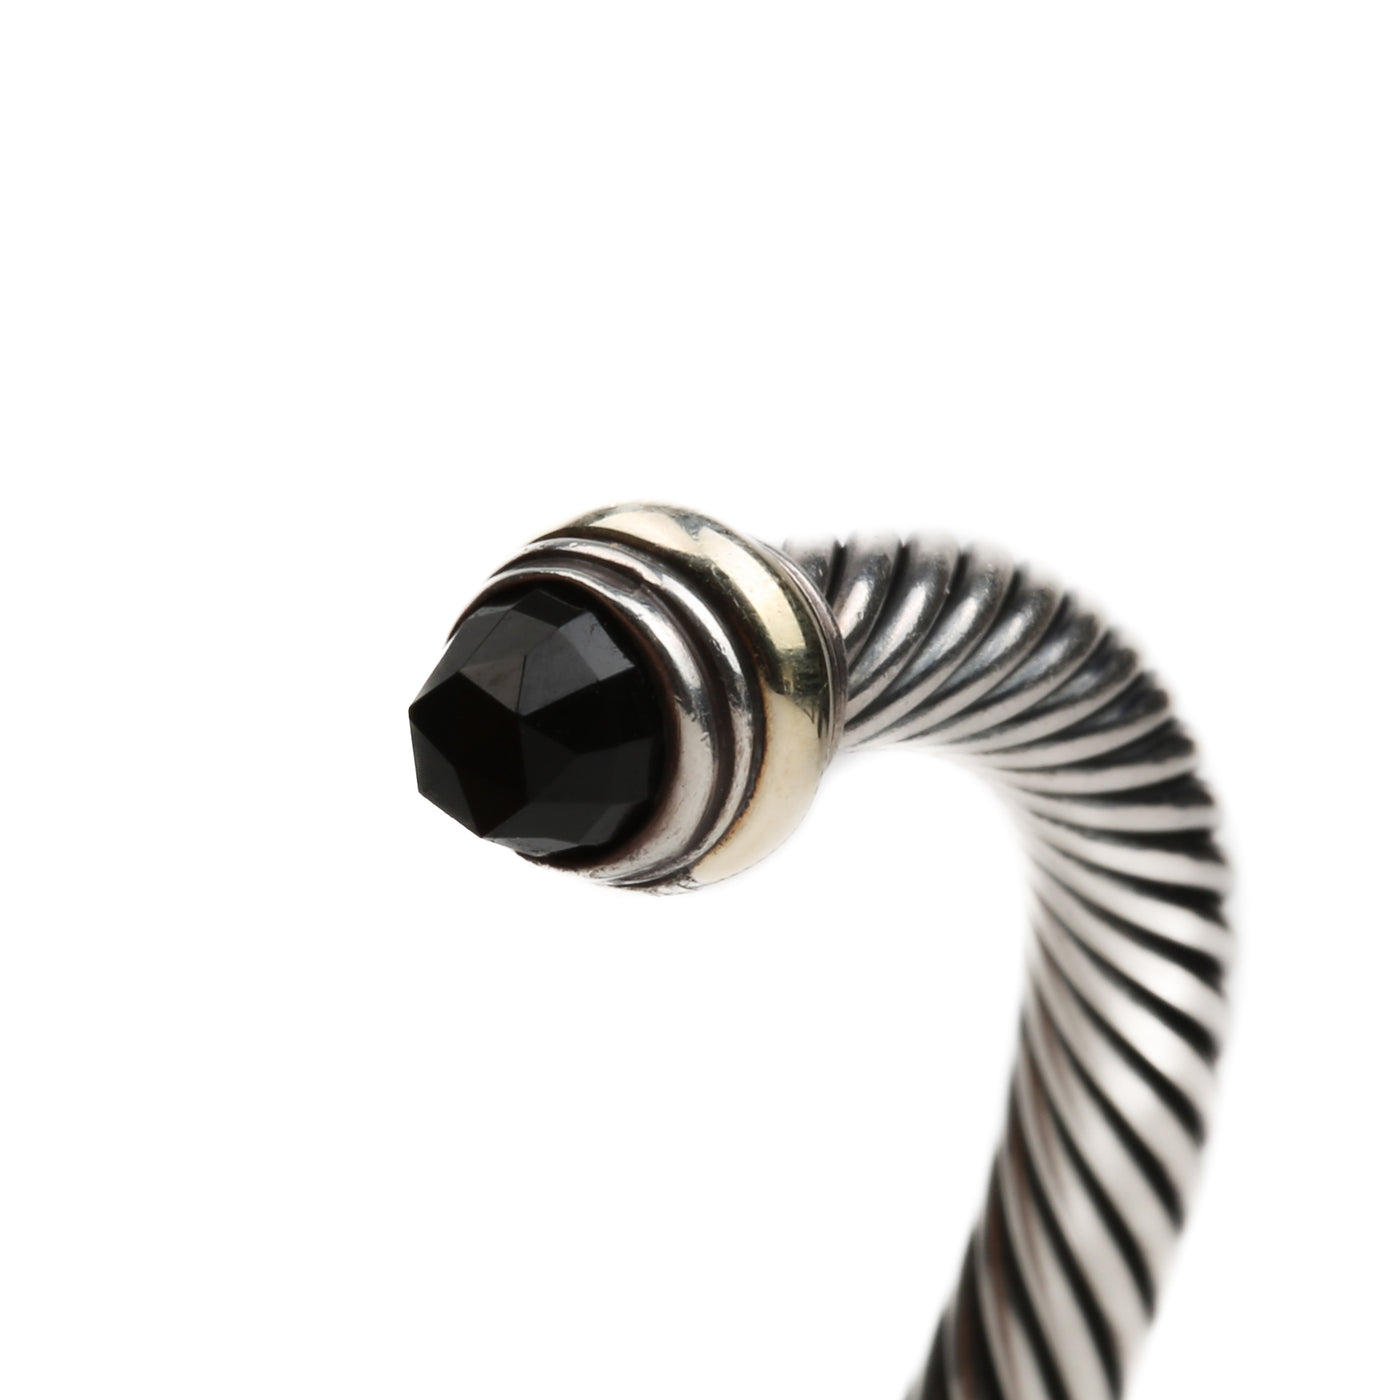 DAVID YURMAN Two Tone Onyx Cable Cuff Bracelet - FINAL SALE